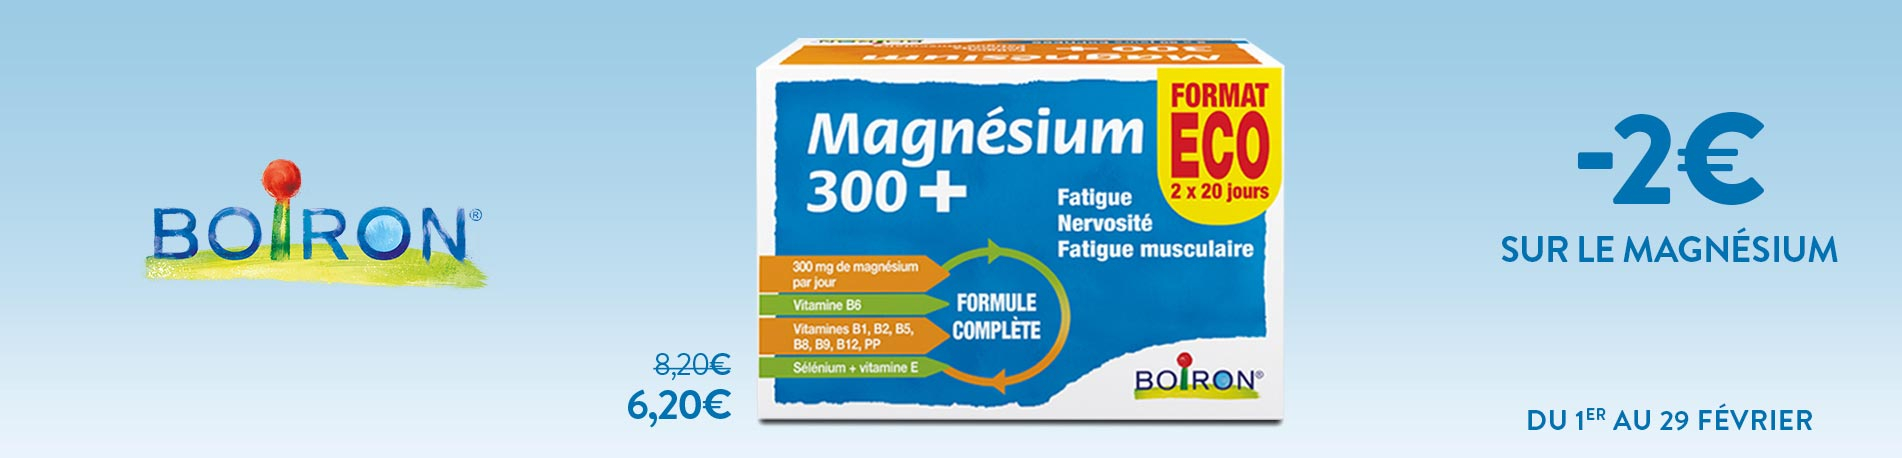 Promotion Boiron Magnésium